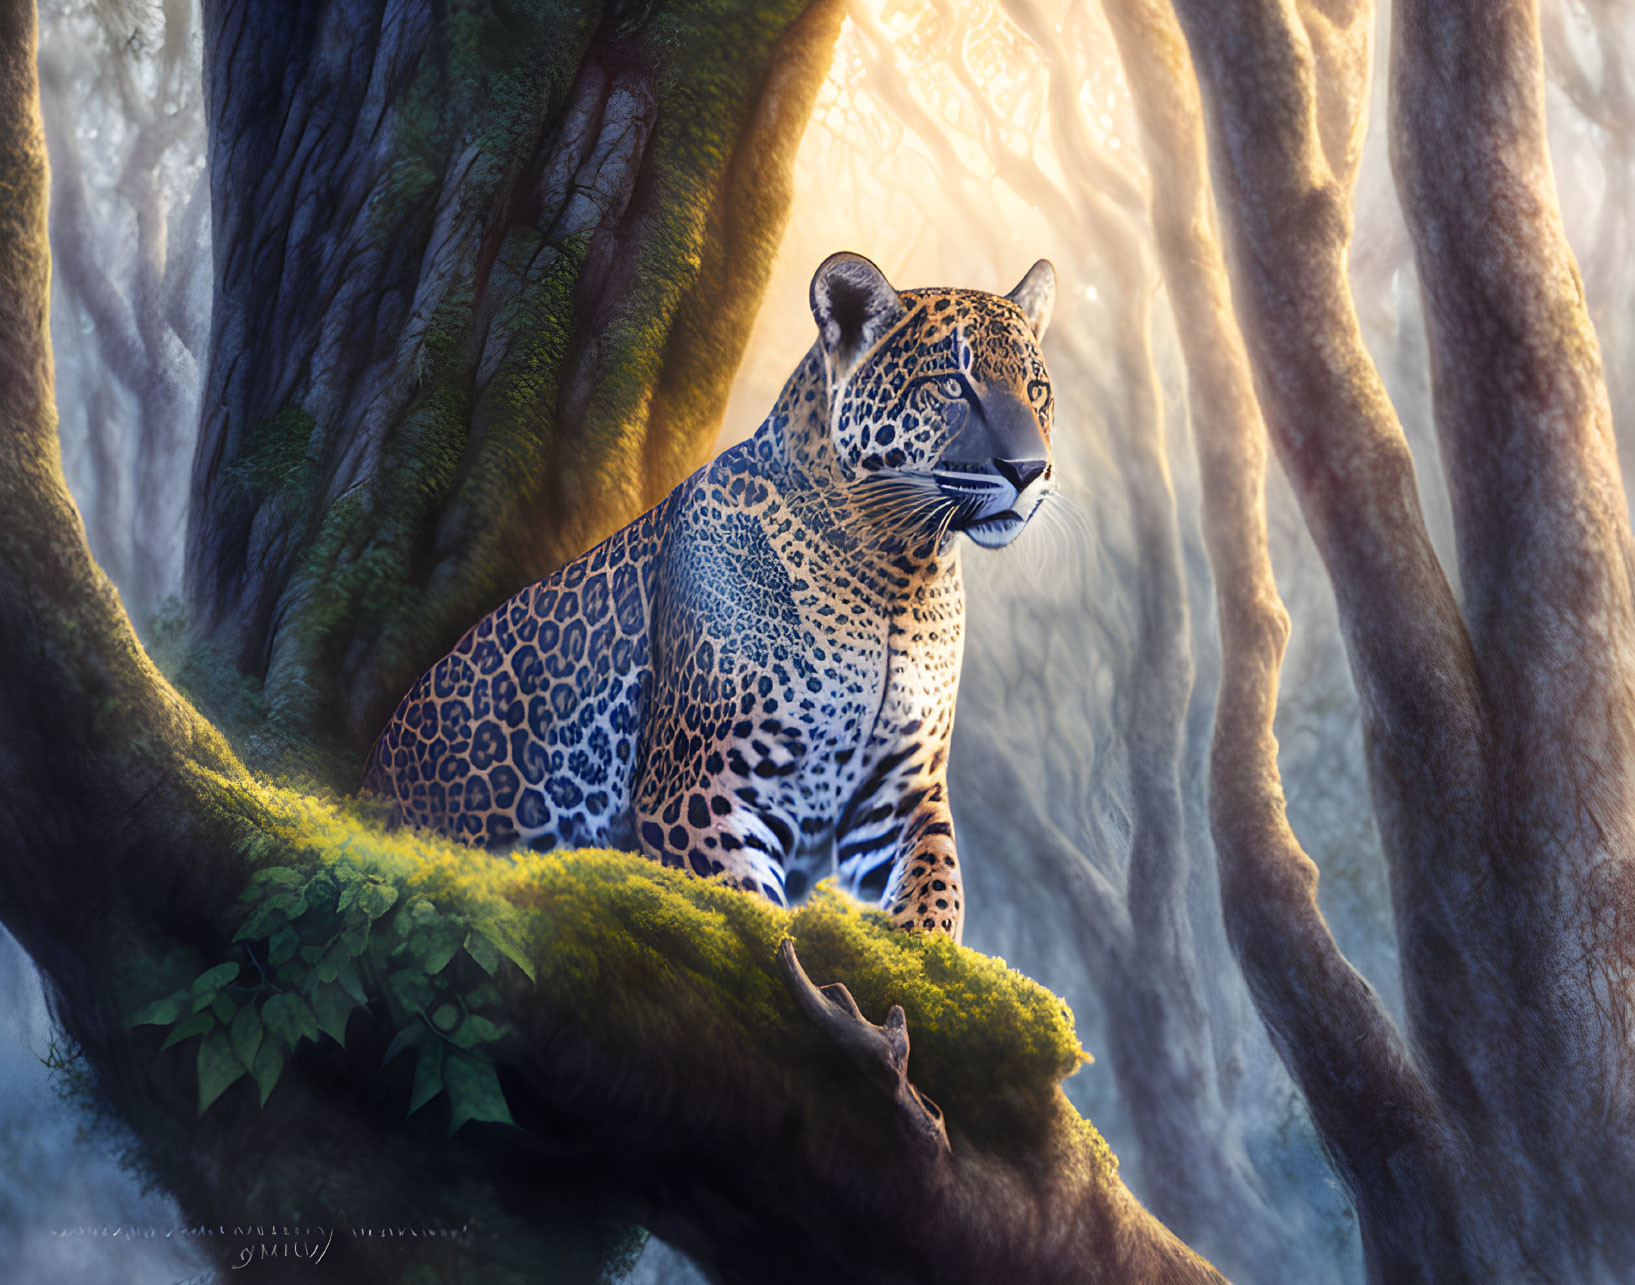 Majestic jaguar resting on mossy branch in forest light